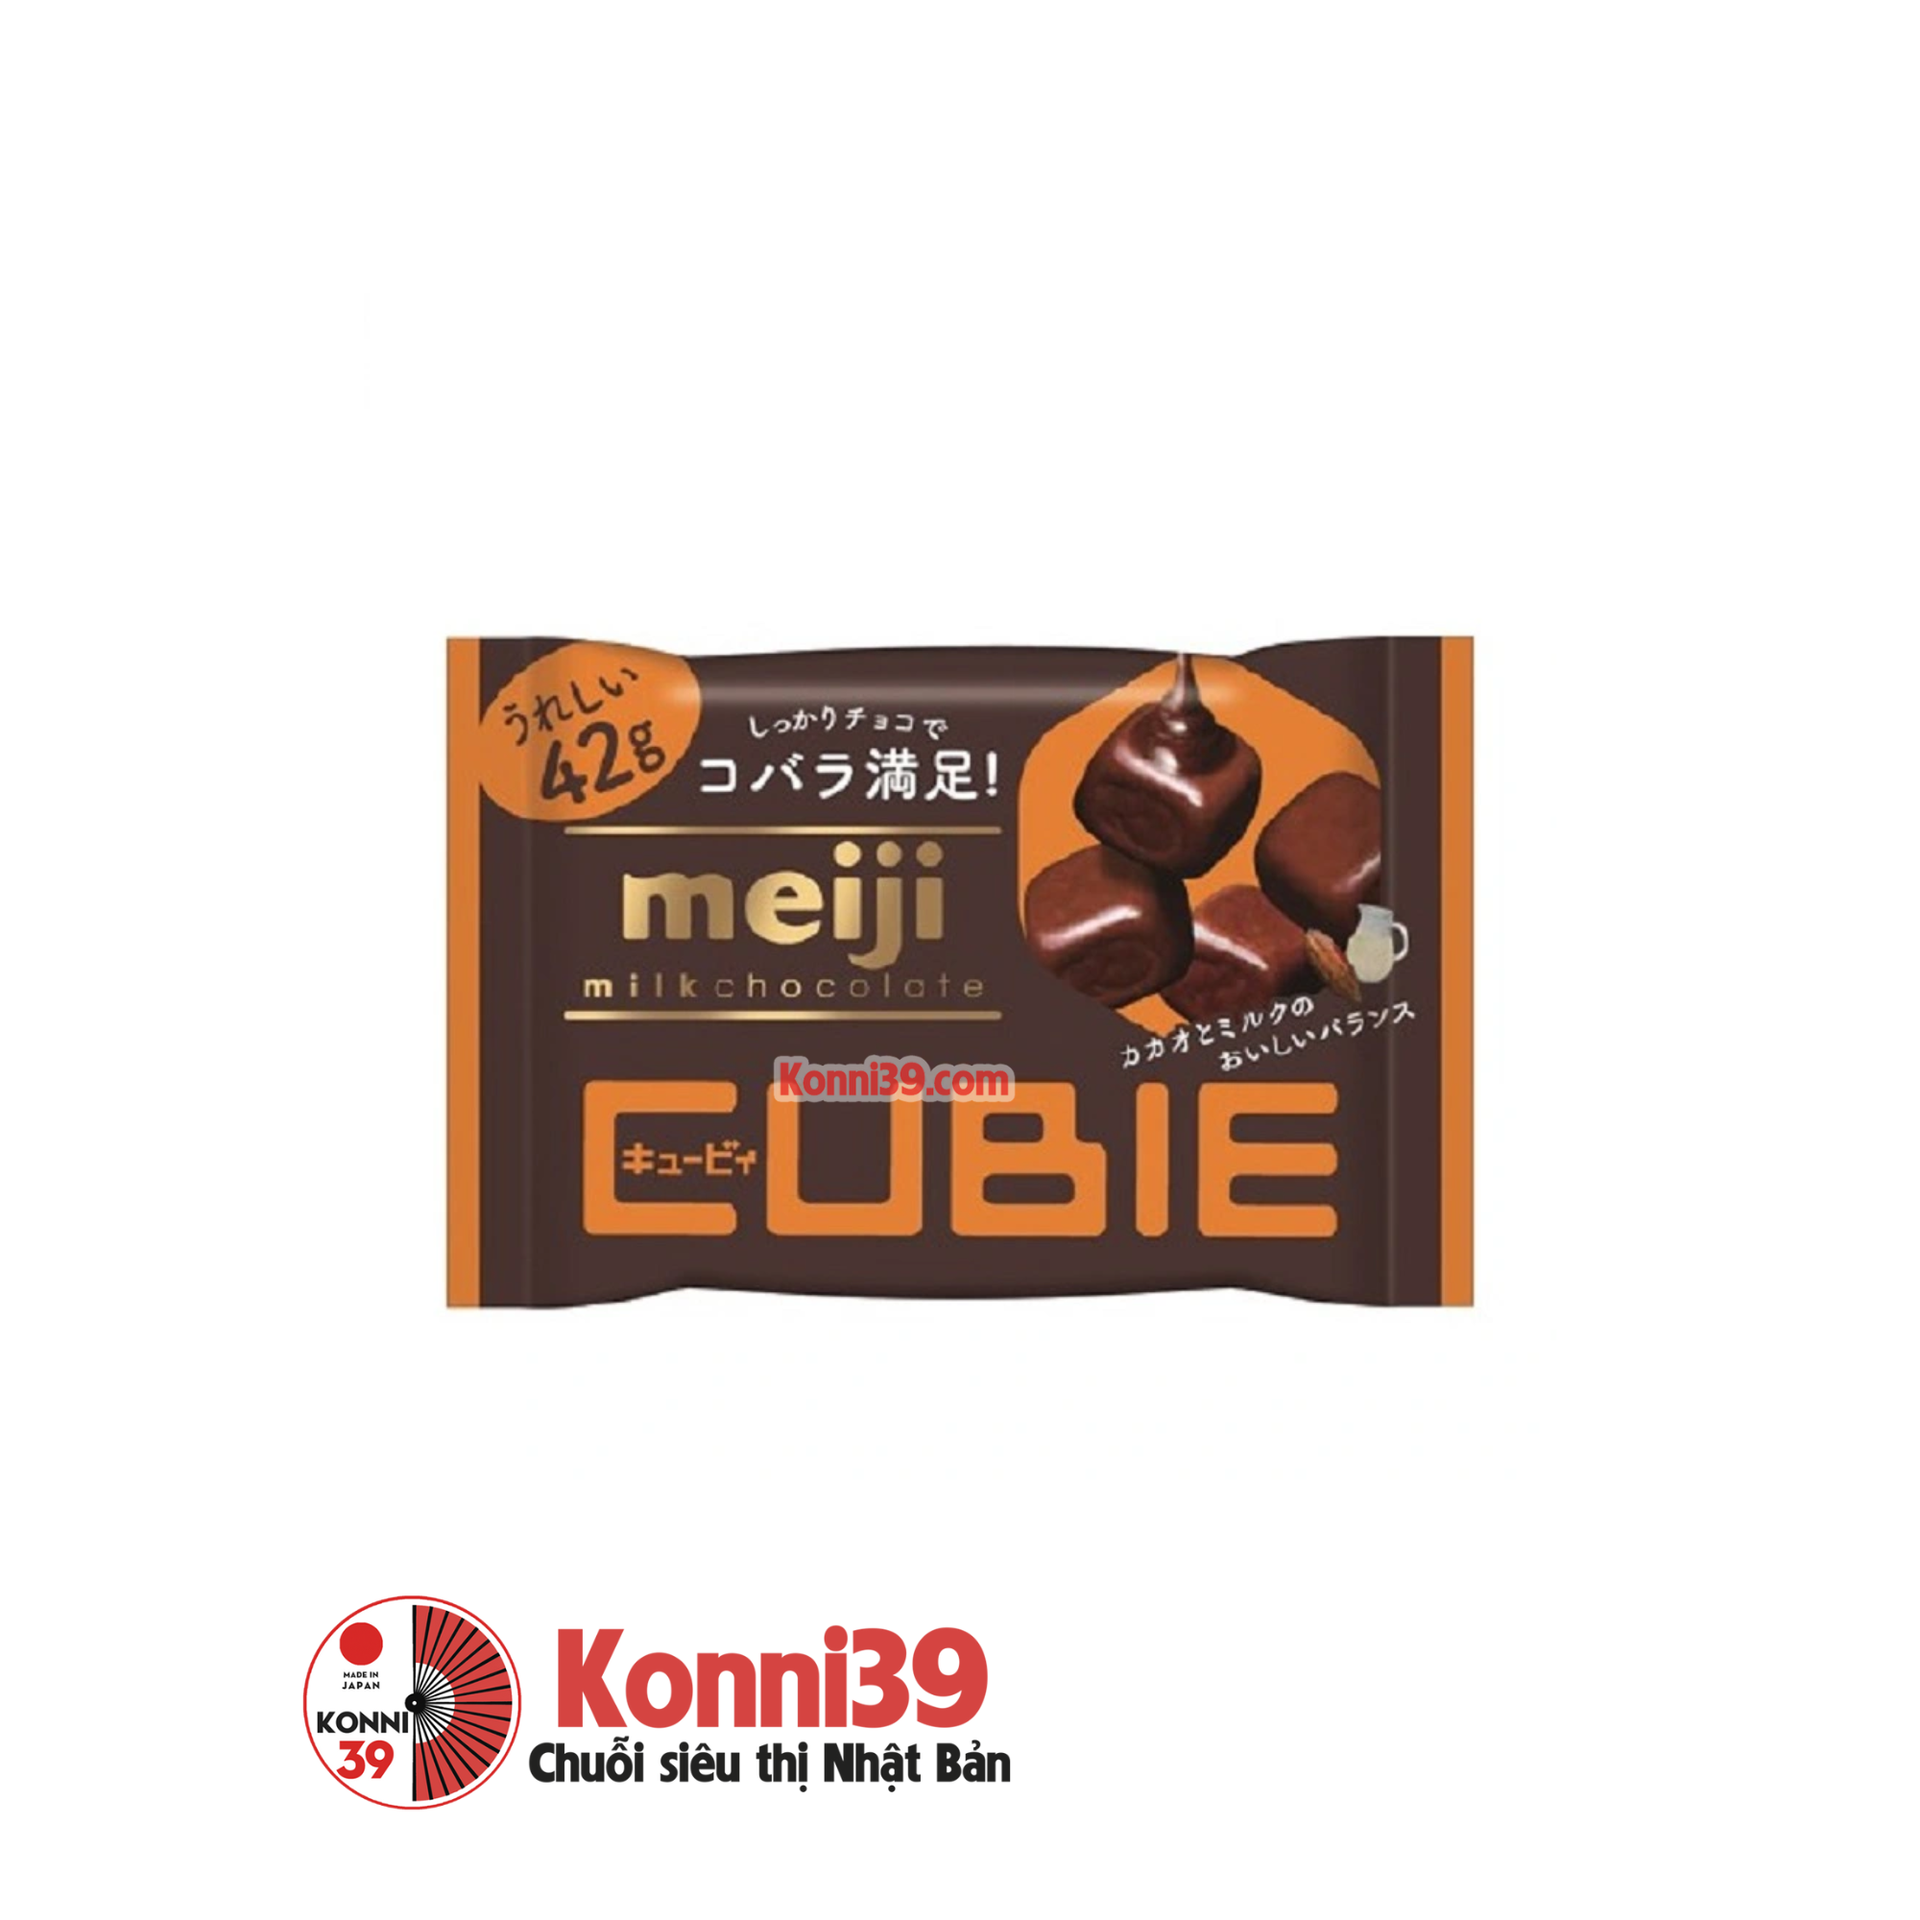 Socola Meiji CUBIE 42g (2 loại)